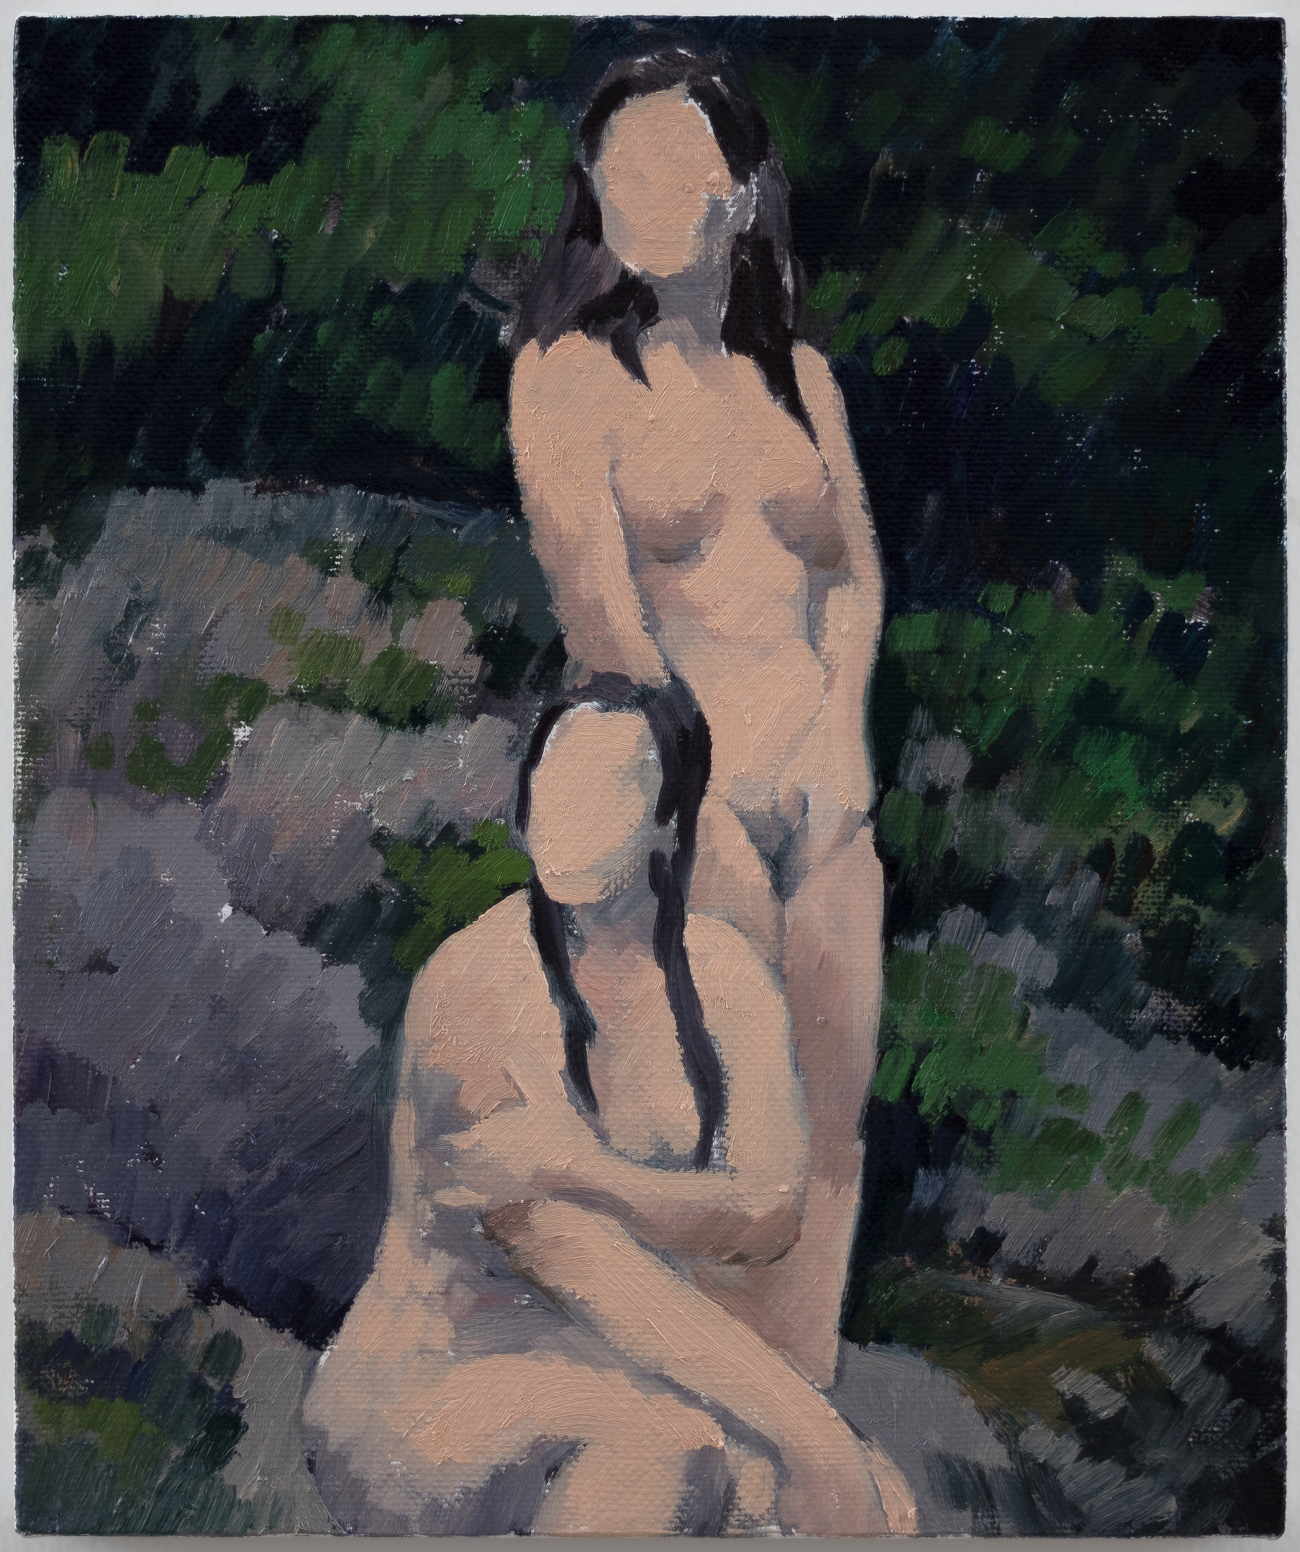 26 女人体与自然 a Female Nudes in Nature a 30×25cm oil on canvas 2017.jpg